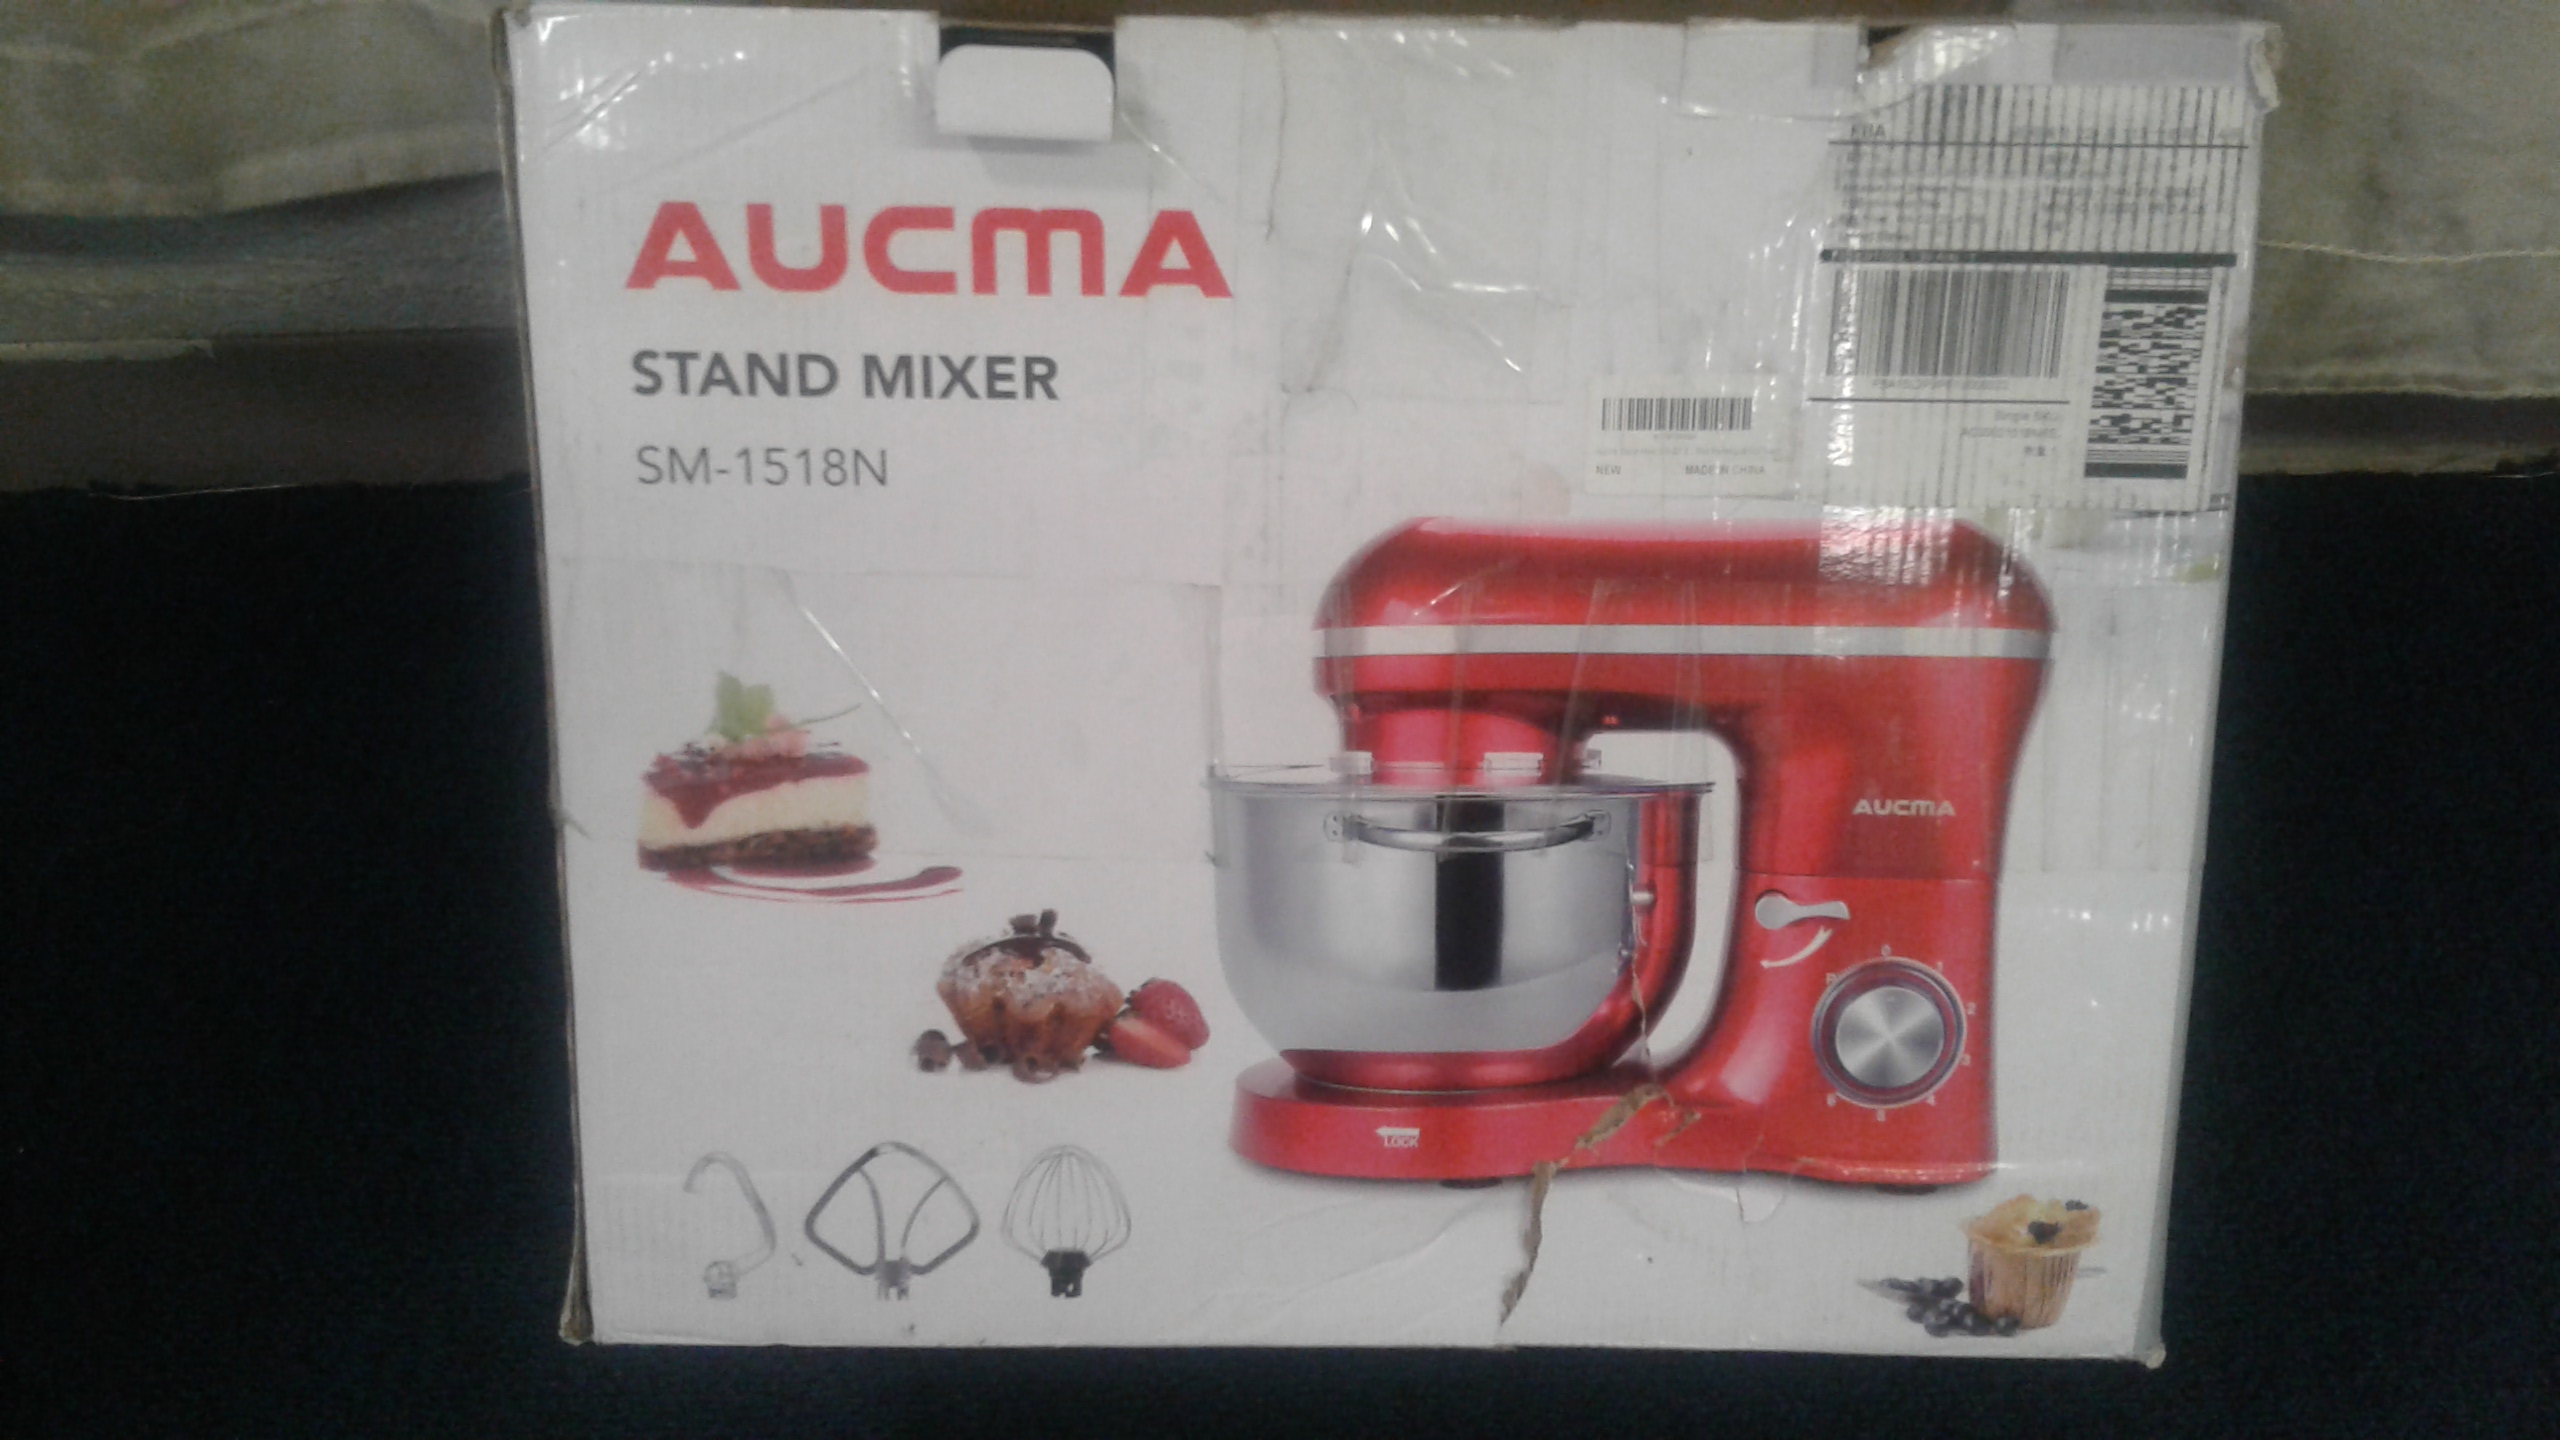  Aucma Stand Mixer,6.5-QT 660W 6-Speed Tilt-Head Food